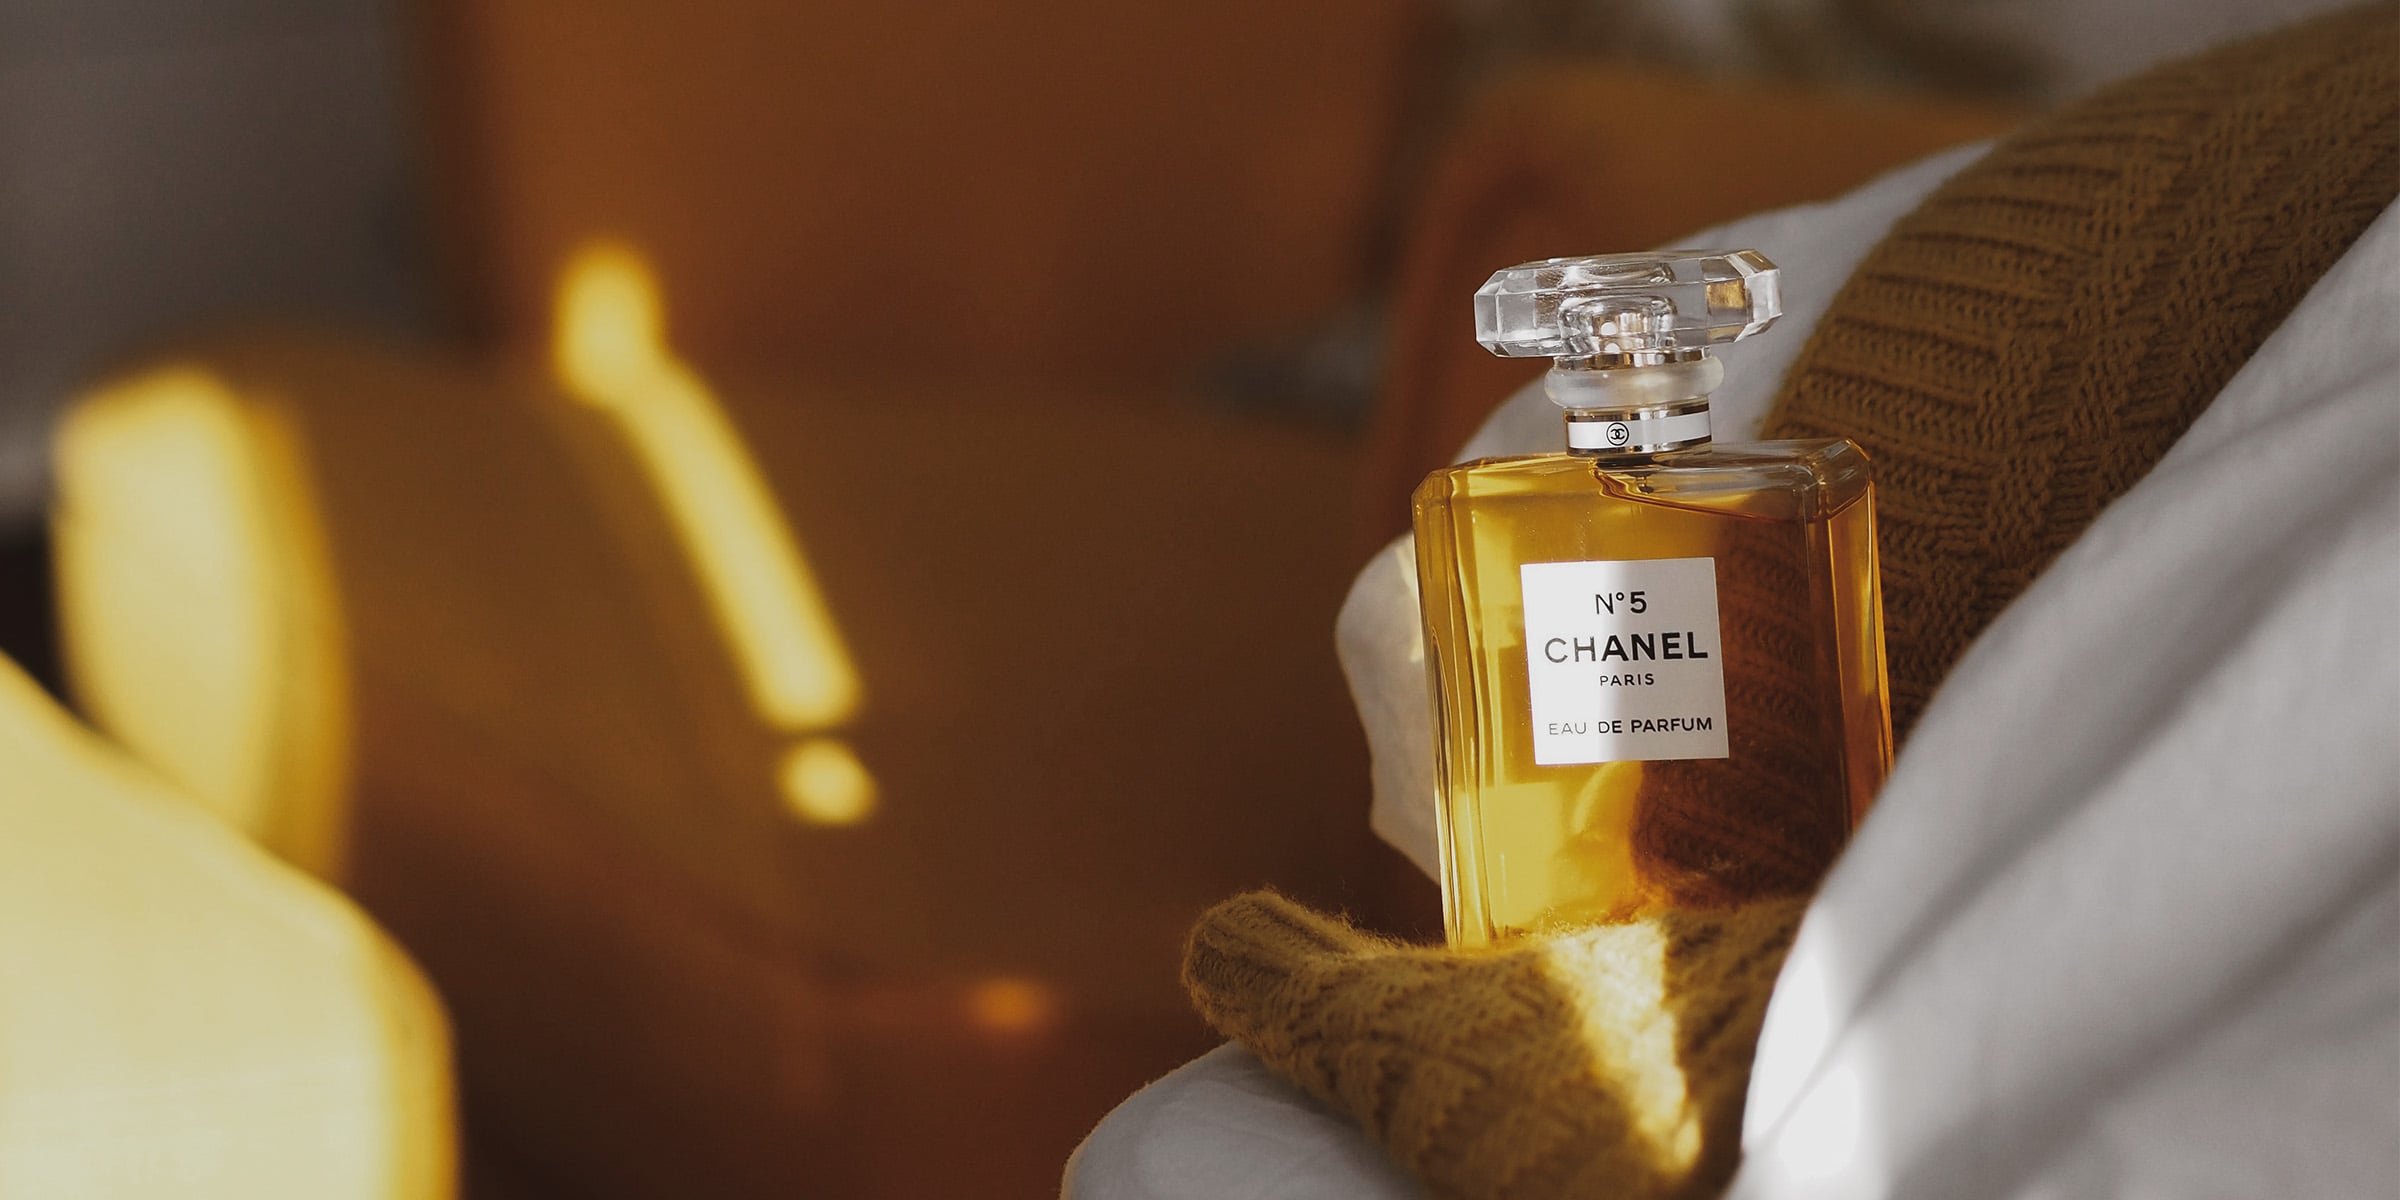 chanel 19 parfum